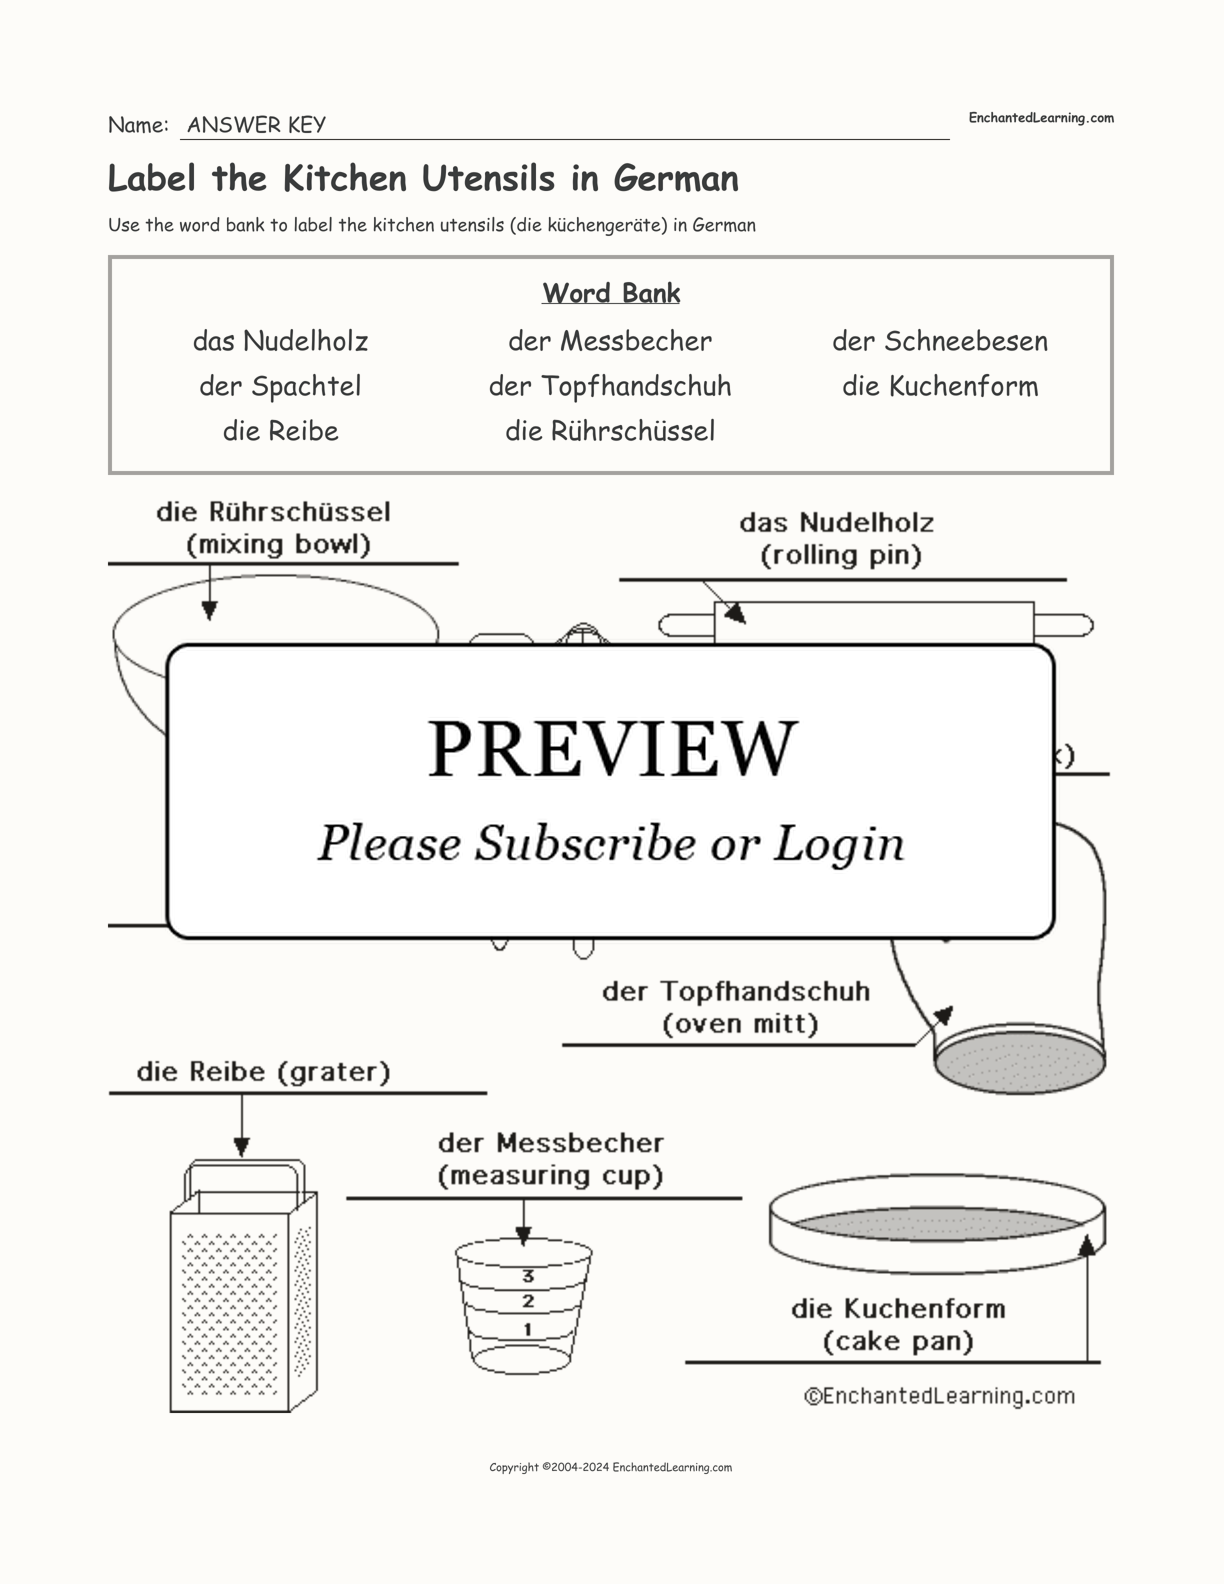 Label the Kitchen Utensils in German interactive worksheet page 2